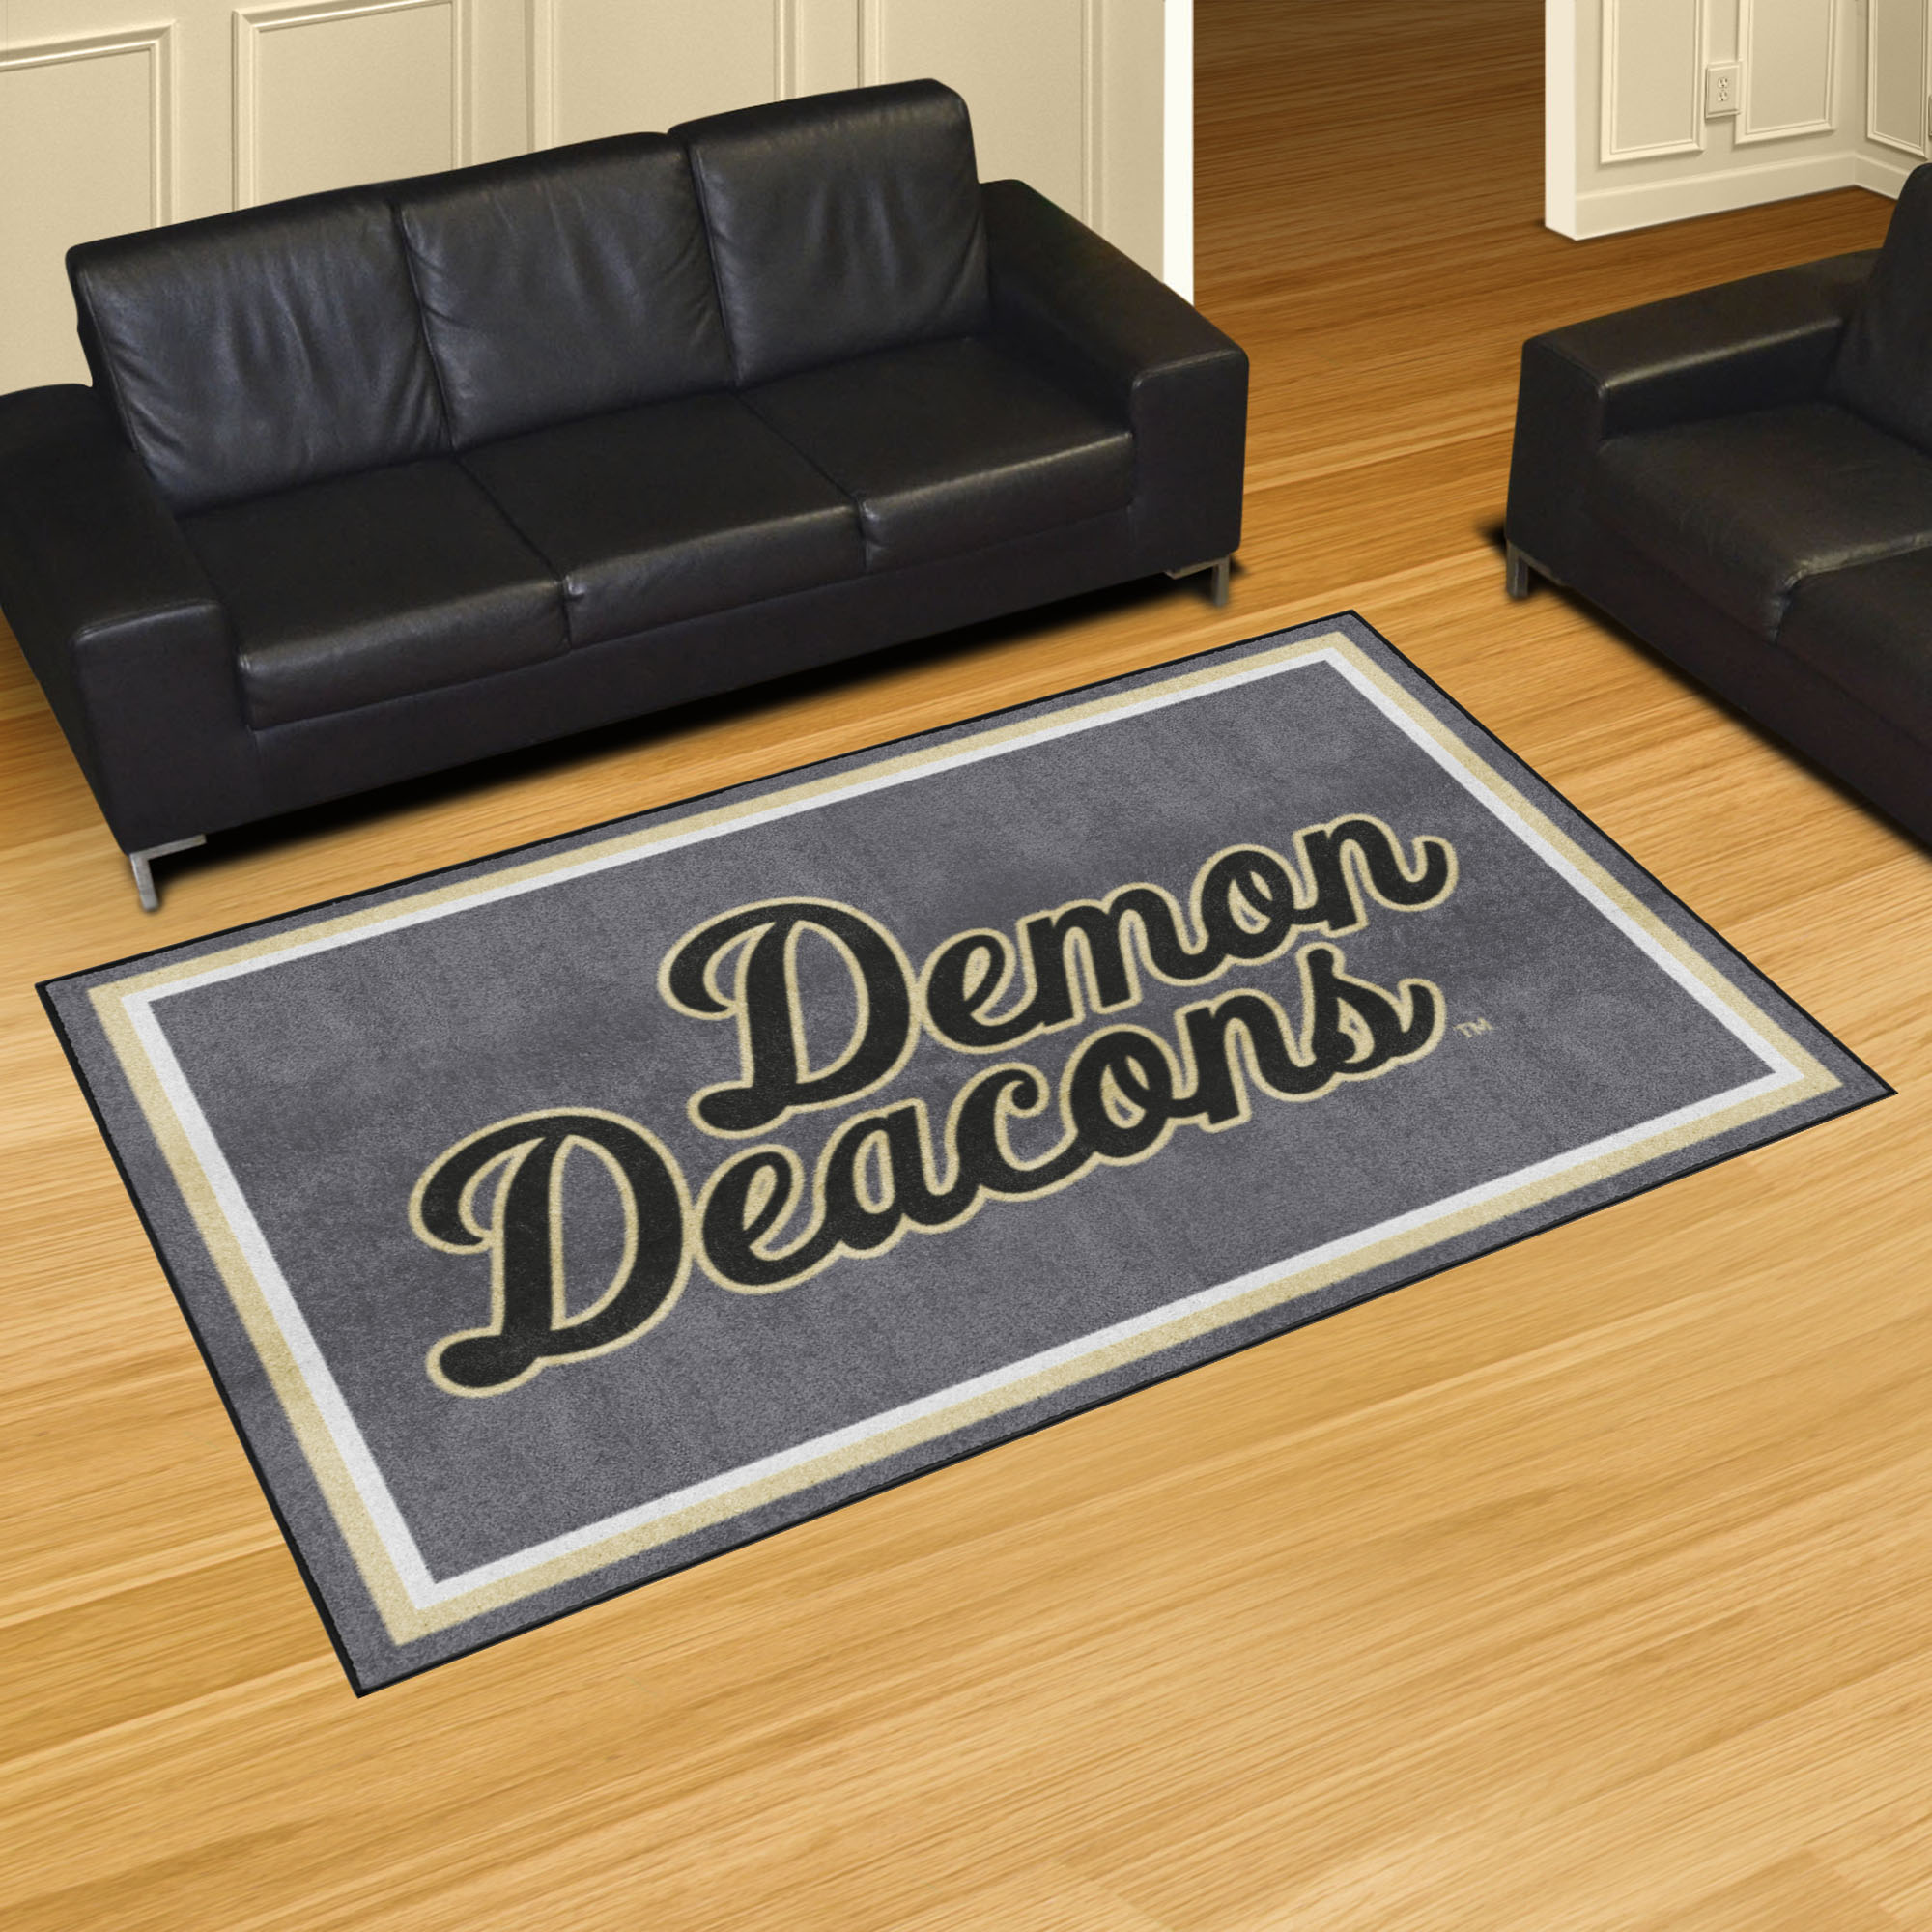 Wake Forest Demon Deacons Area Rug - 5' x 8' Nylon